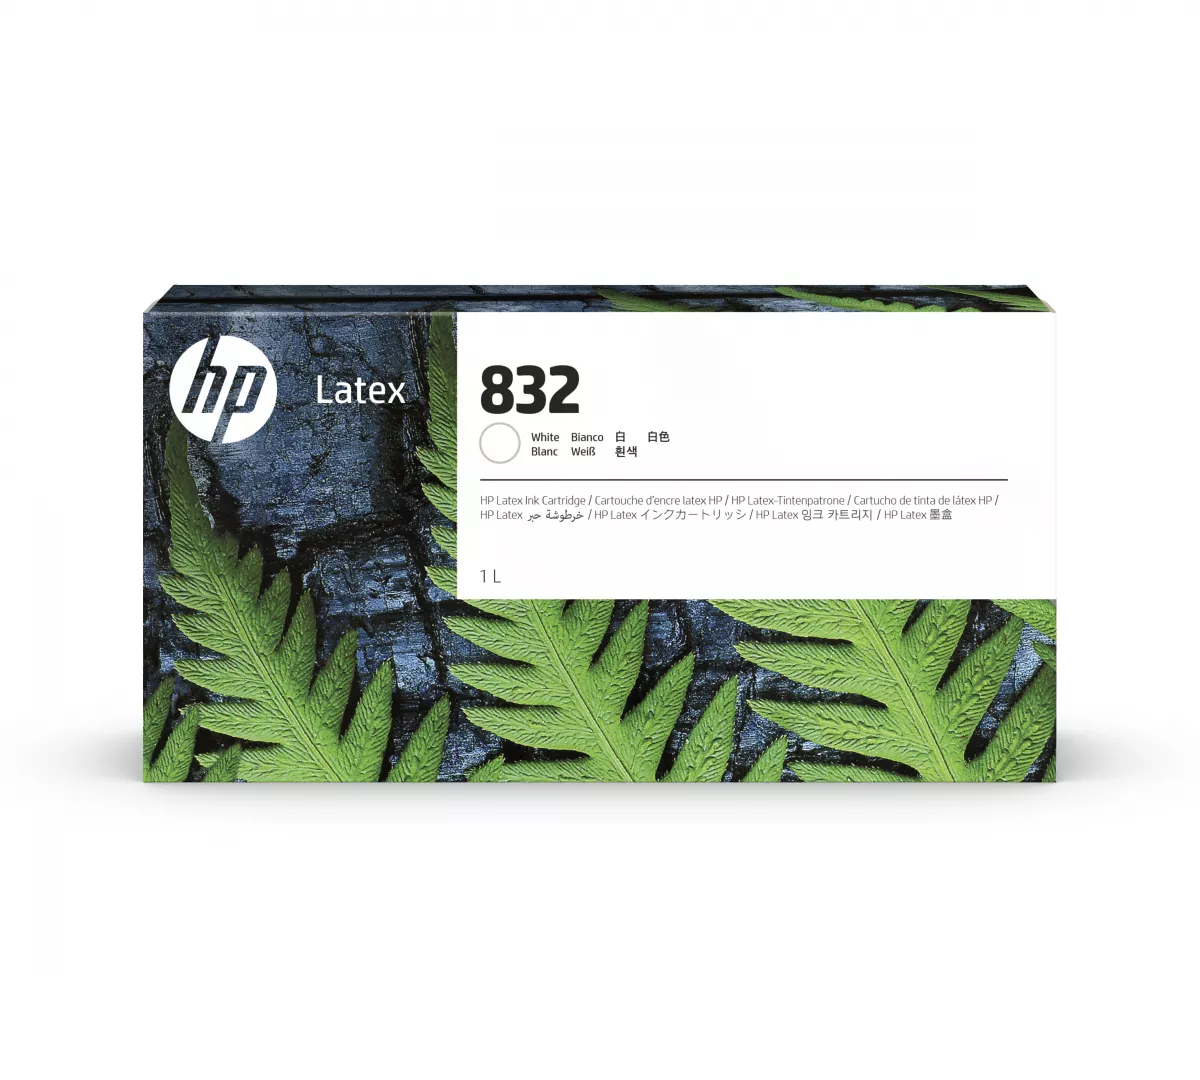 Consumabile imprimante - HP 832 White Latex Ink Cartridge 1 L, transilvae.ro